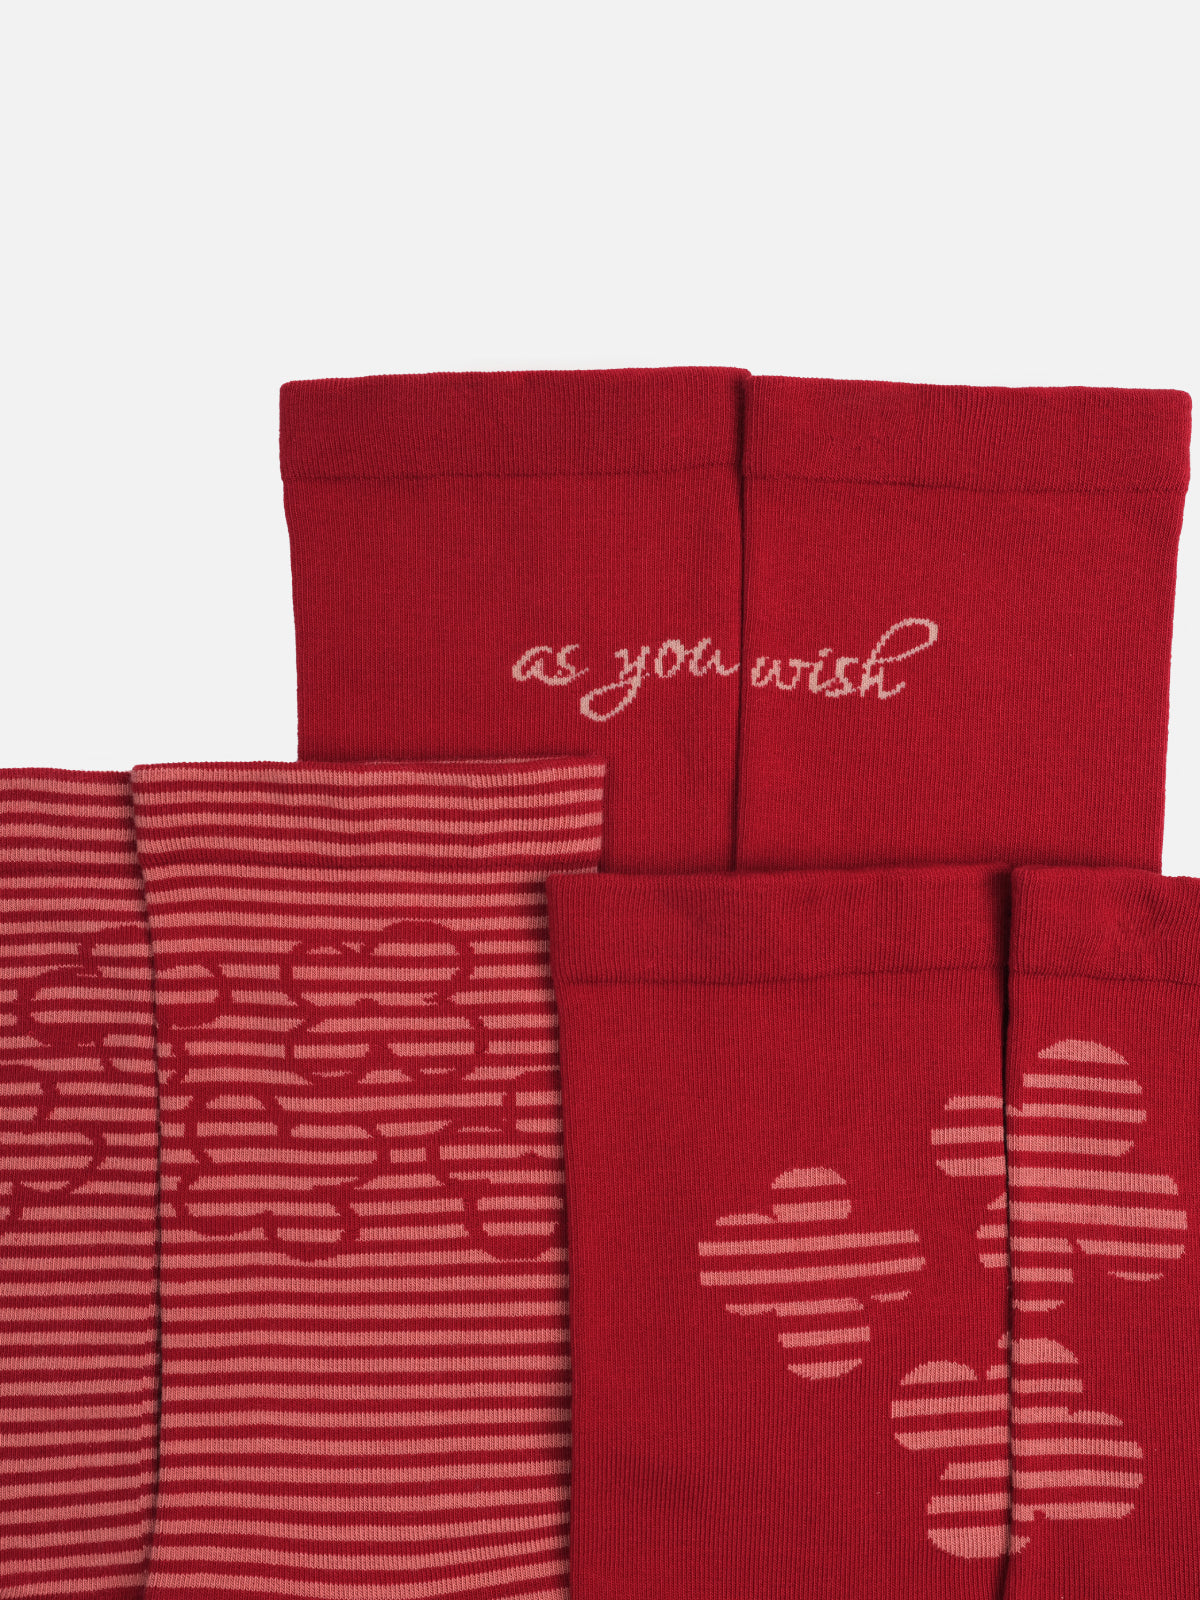 Make a Wish Limited Edition Cotton Socks Gift Set